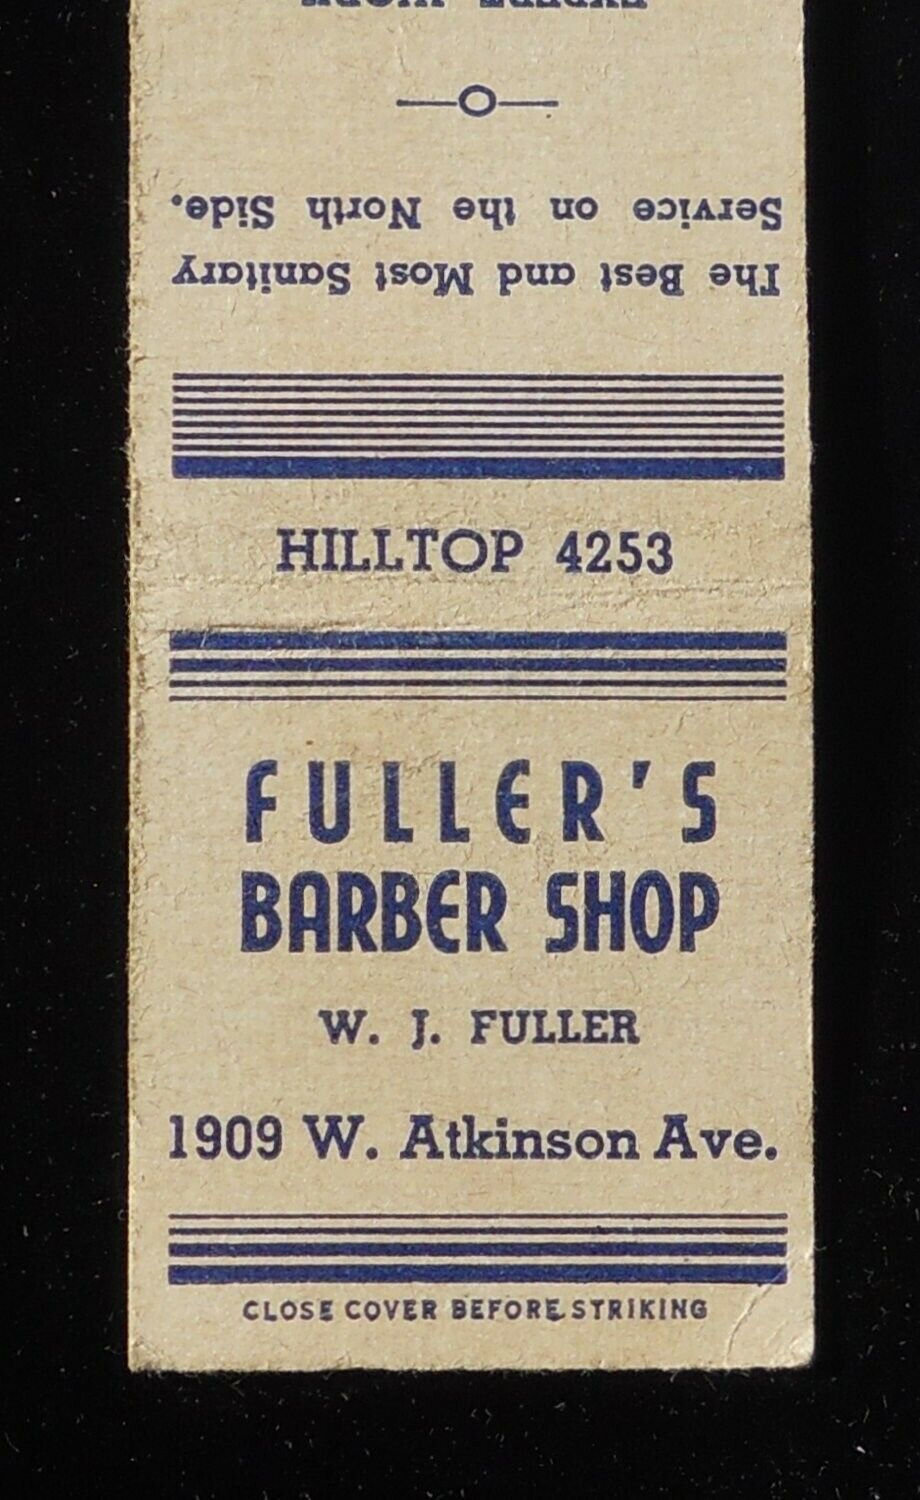 1930s Willens Fuller's Barber Shop W. J. Fuller 1909 W. Atkinson Ave. Milwaukee